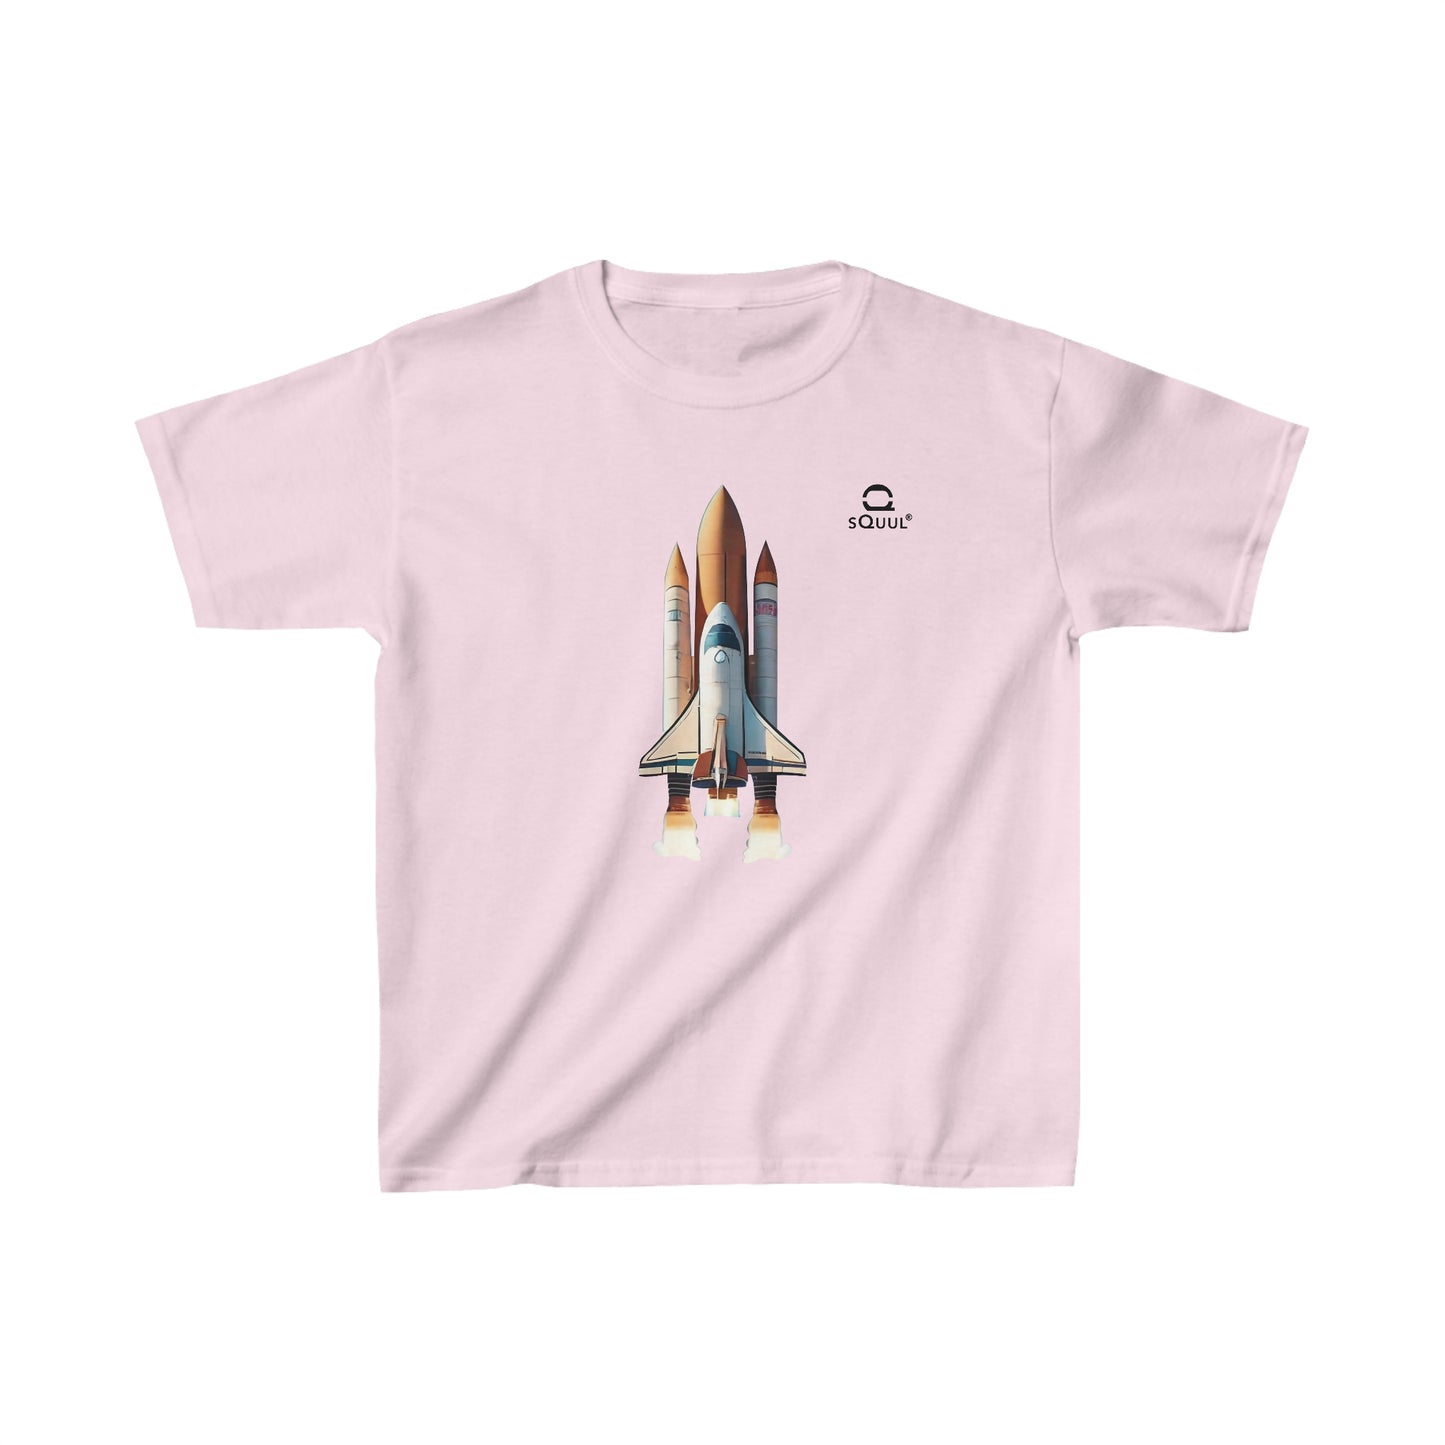 Kids T-Shirt Rocket #SquulOfAerospace